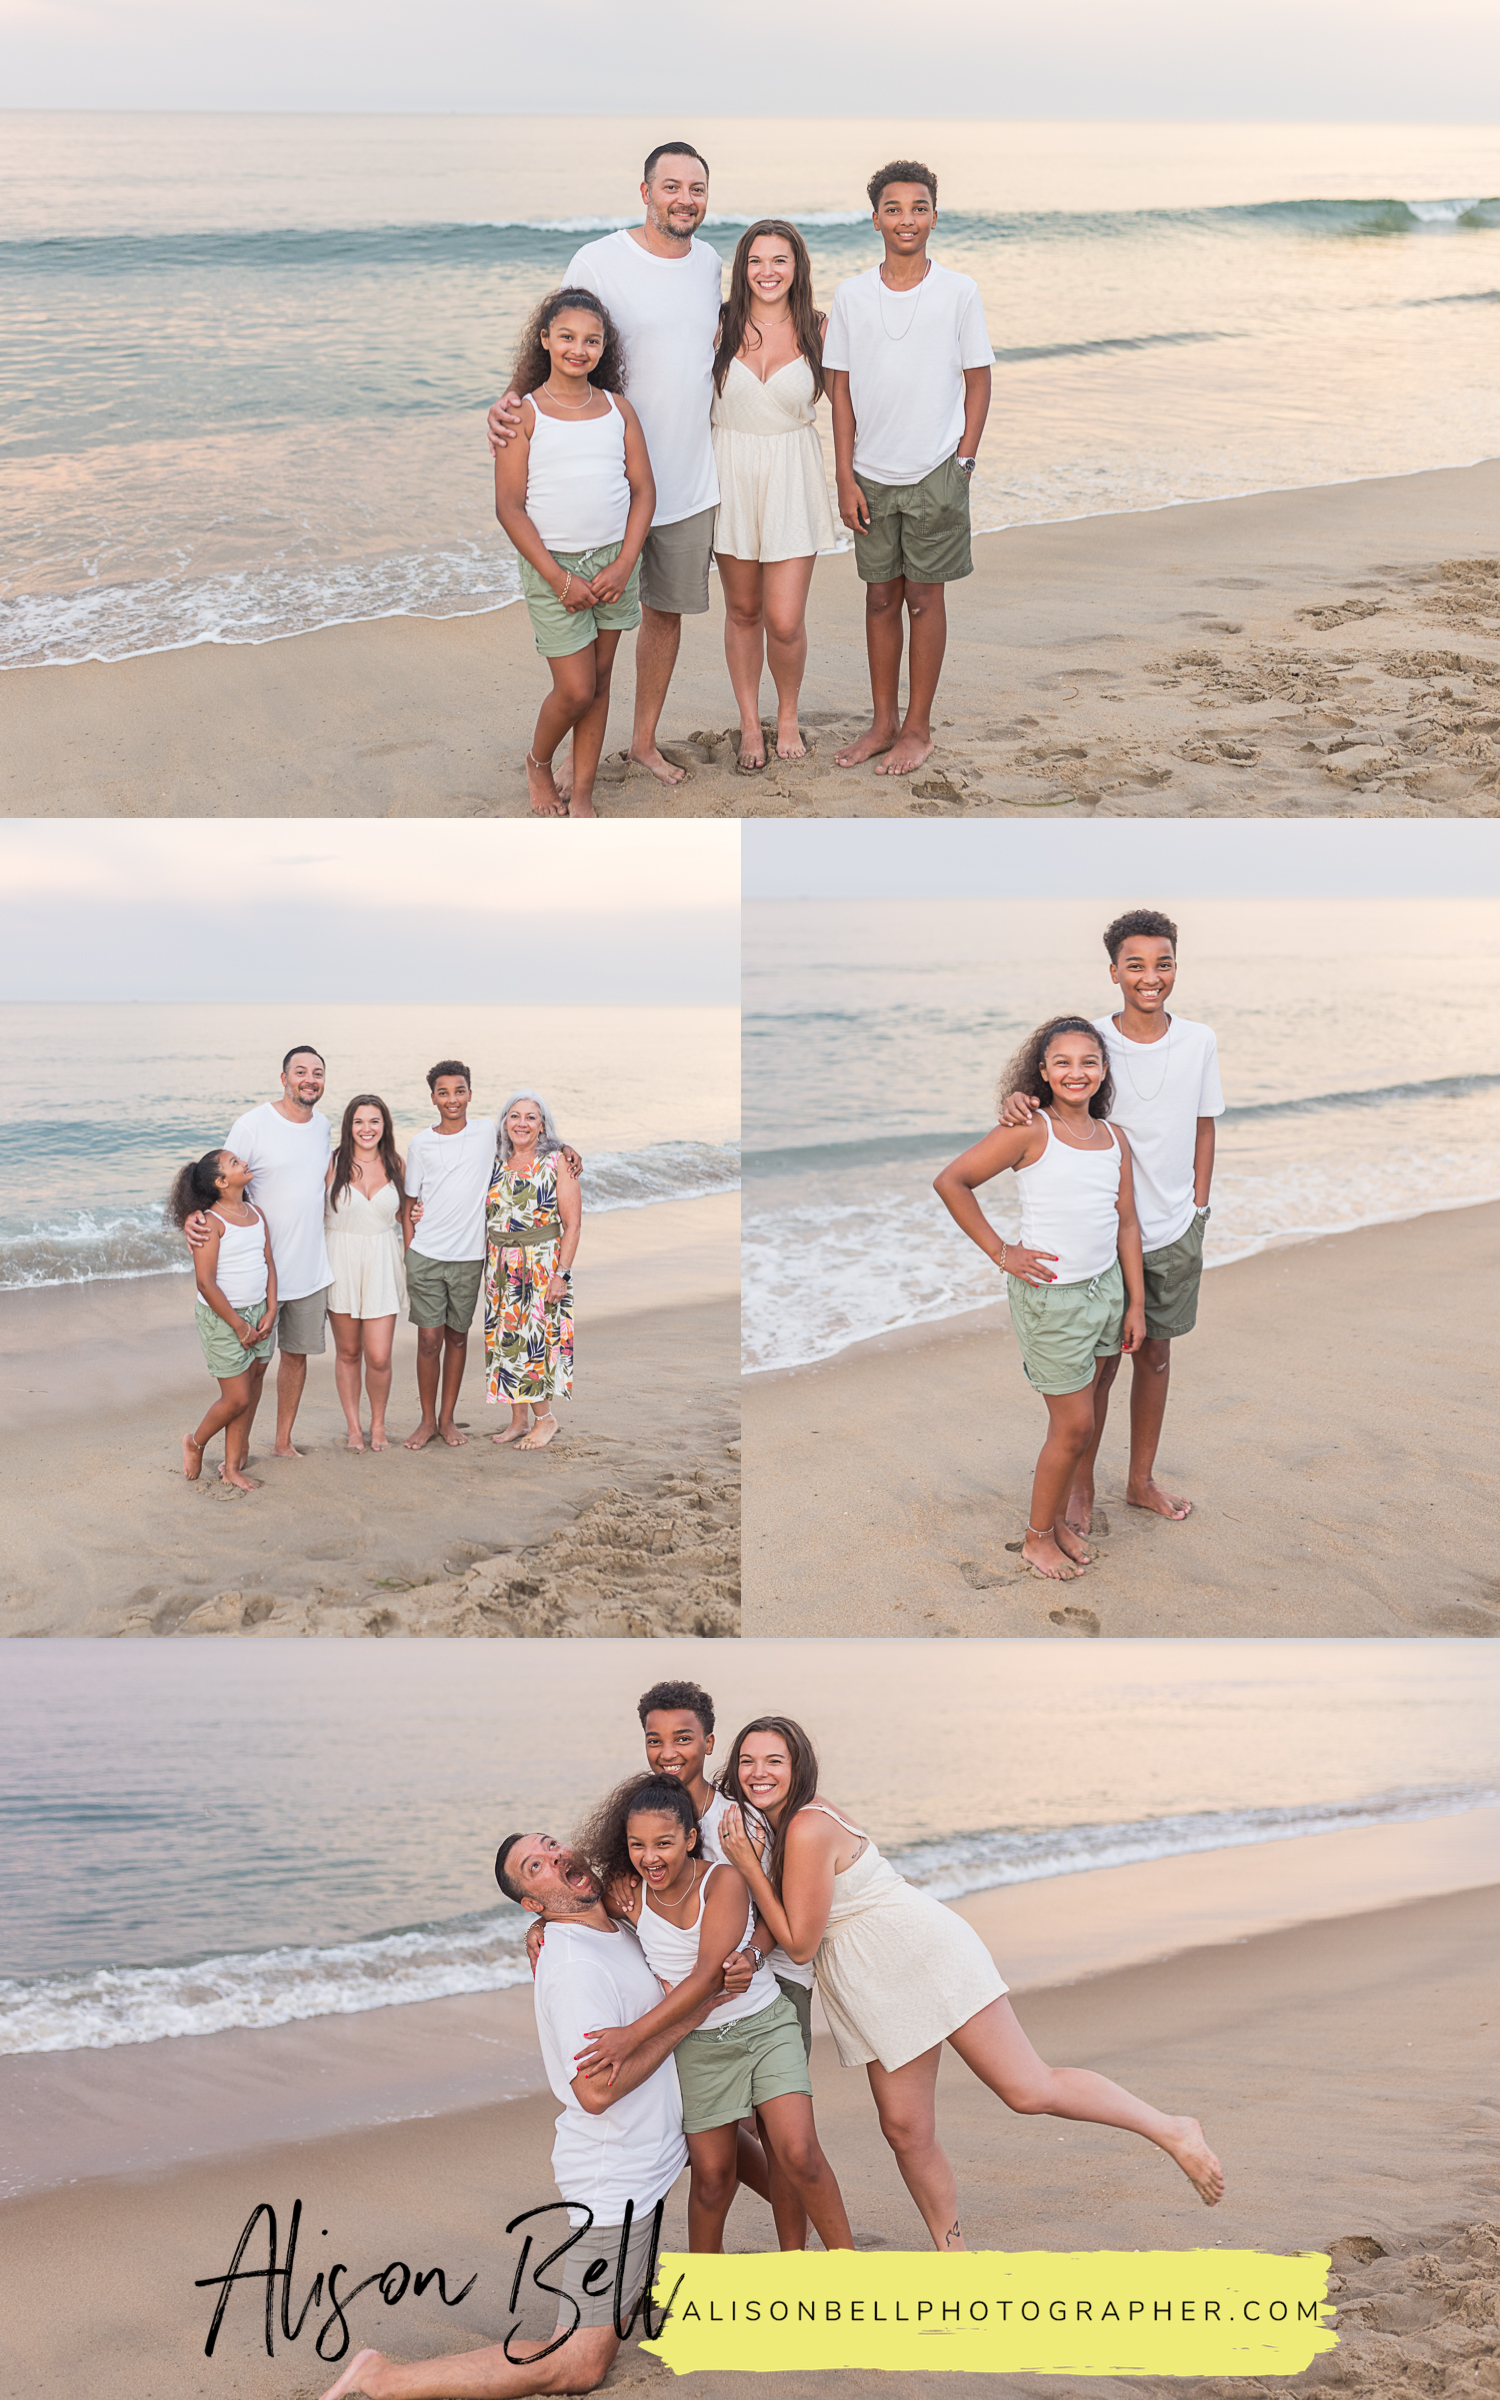 Extended family photographer on Croatan Beach in Virginia Beach, VA by Alison Bell, Photographer. Alisonbellphotographer.com